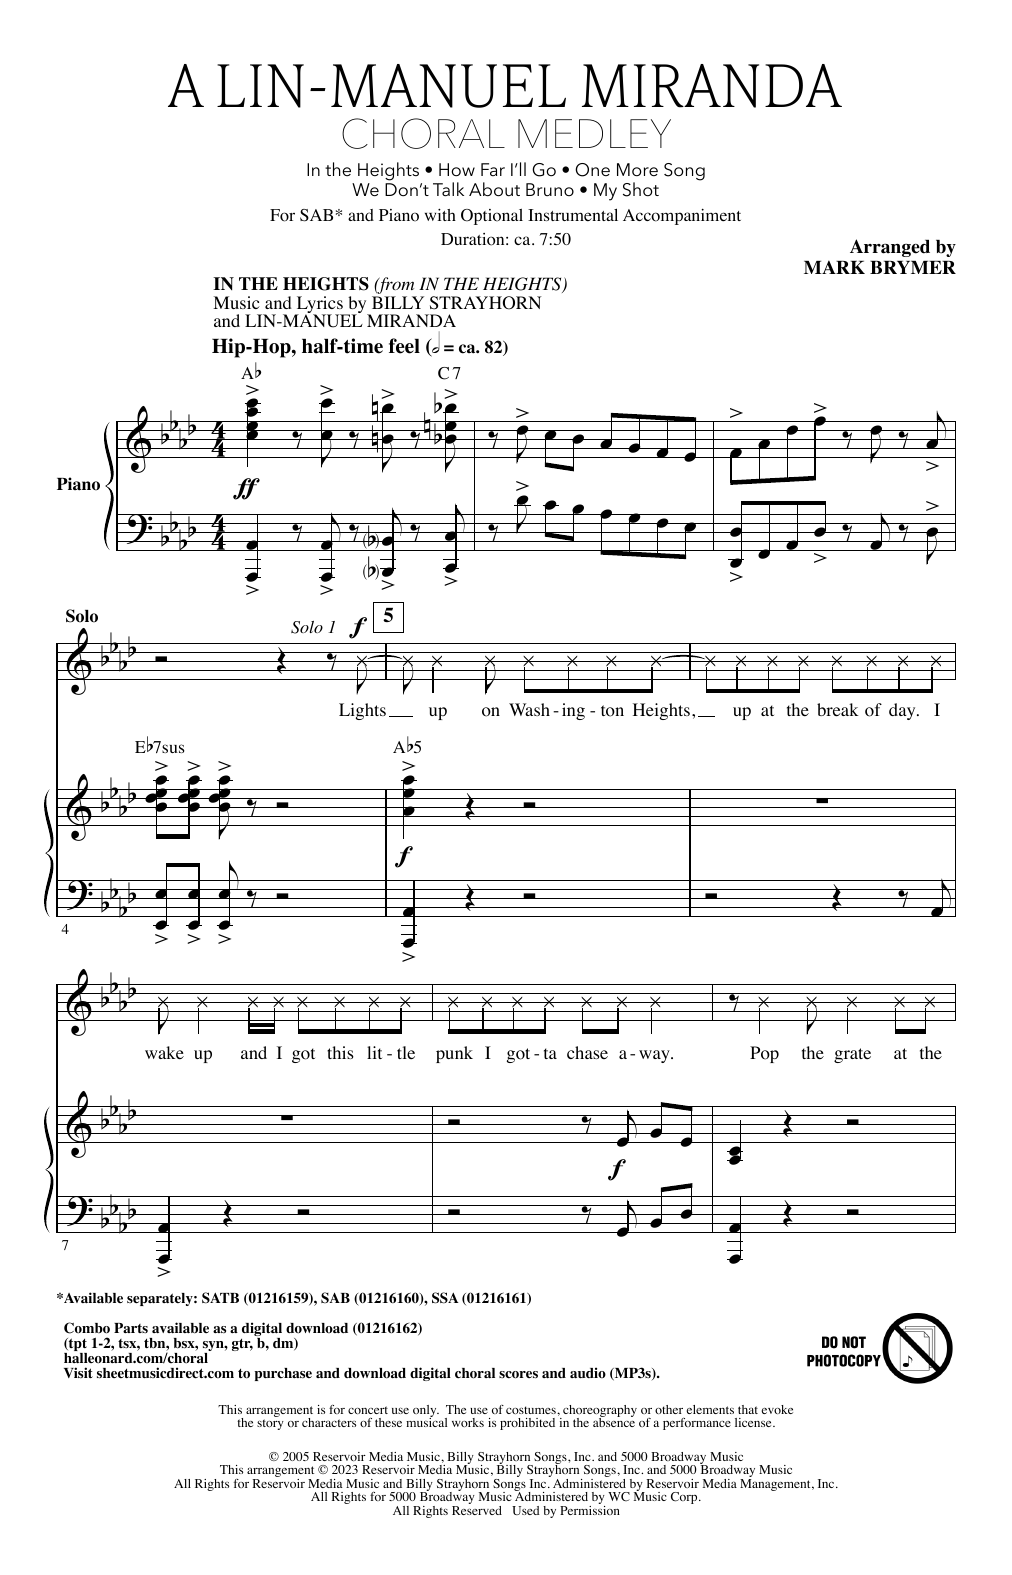 Lin-Manuel Miranda A Lin-Manuel Miranda Choral Medley (arr. Mark Brymer) sheet music notes and chords arranged for SATB Choir